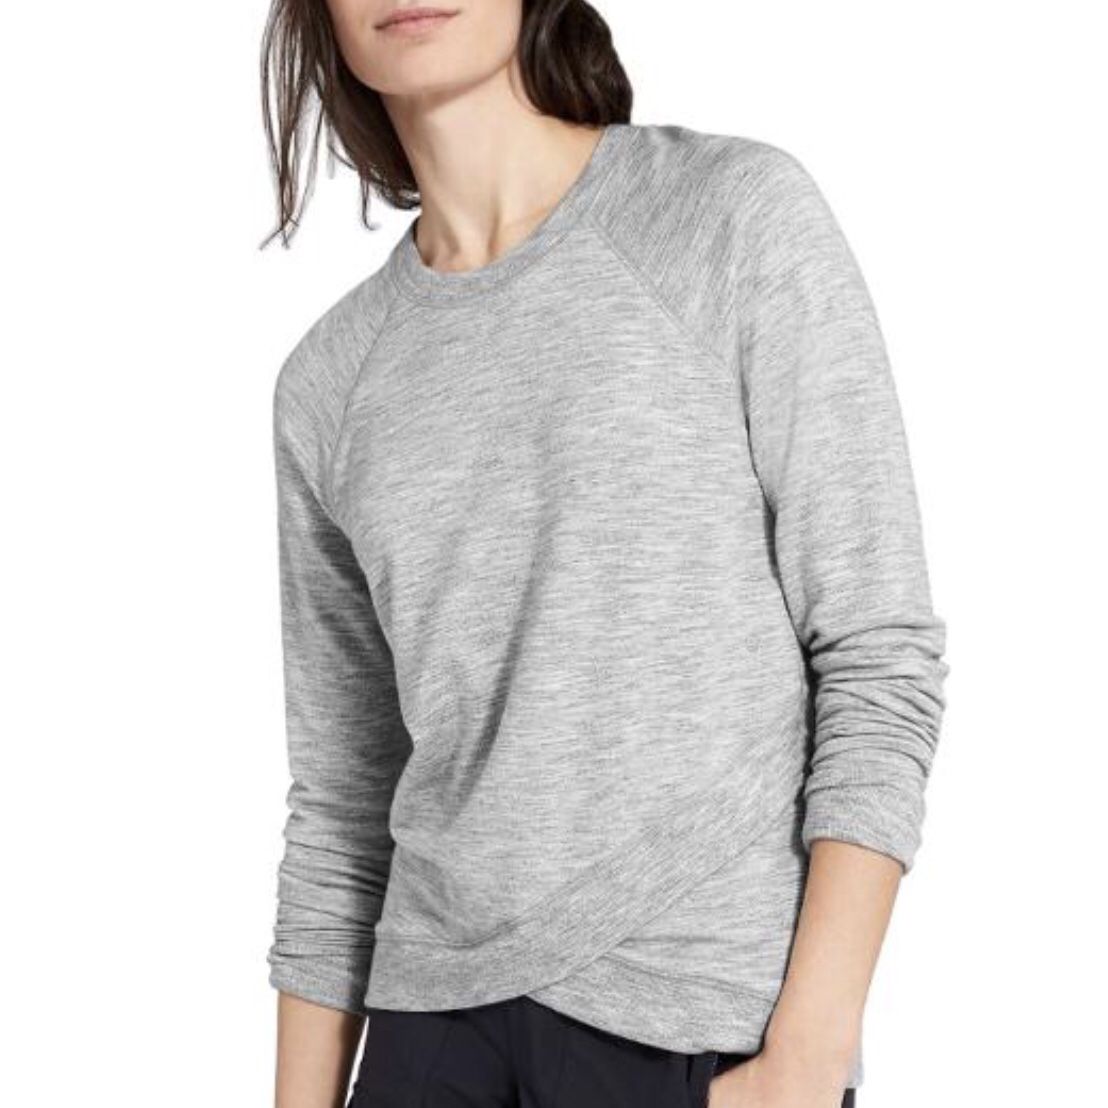 Athleta | Grey Criss-Cross Pullover Sweatshirt- SZ XS